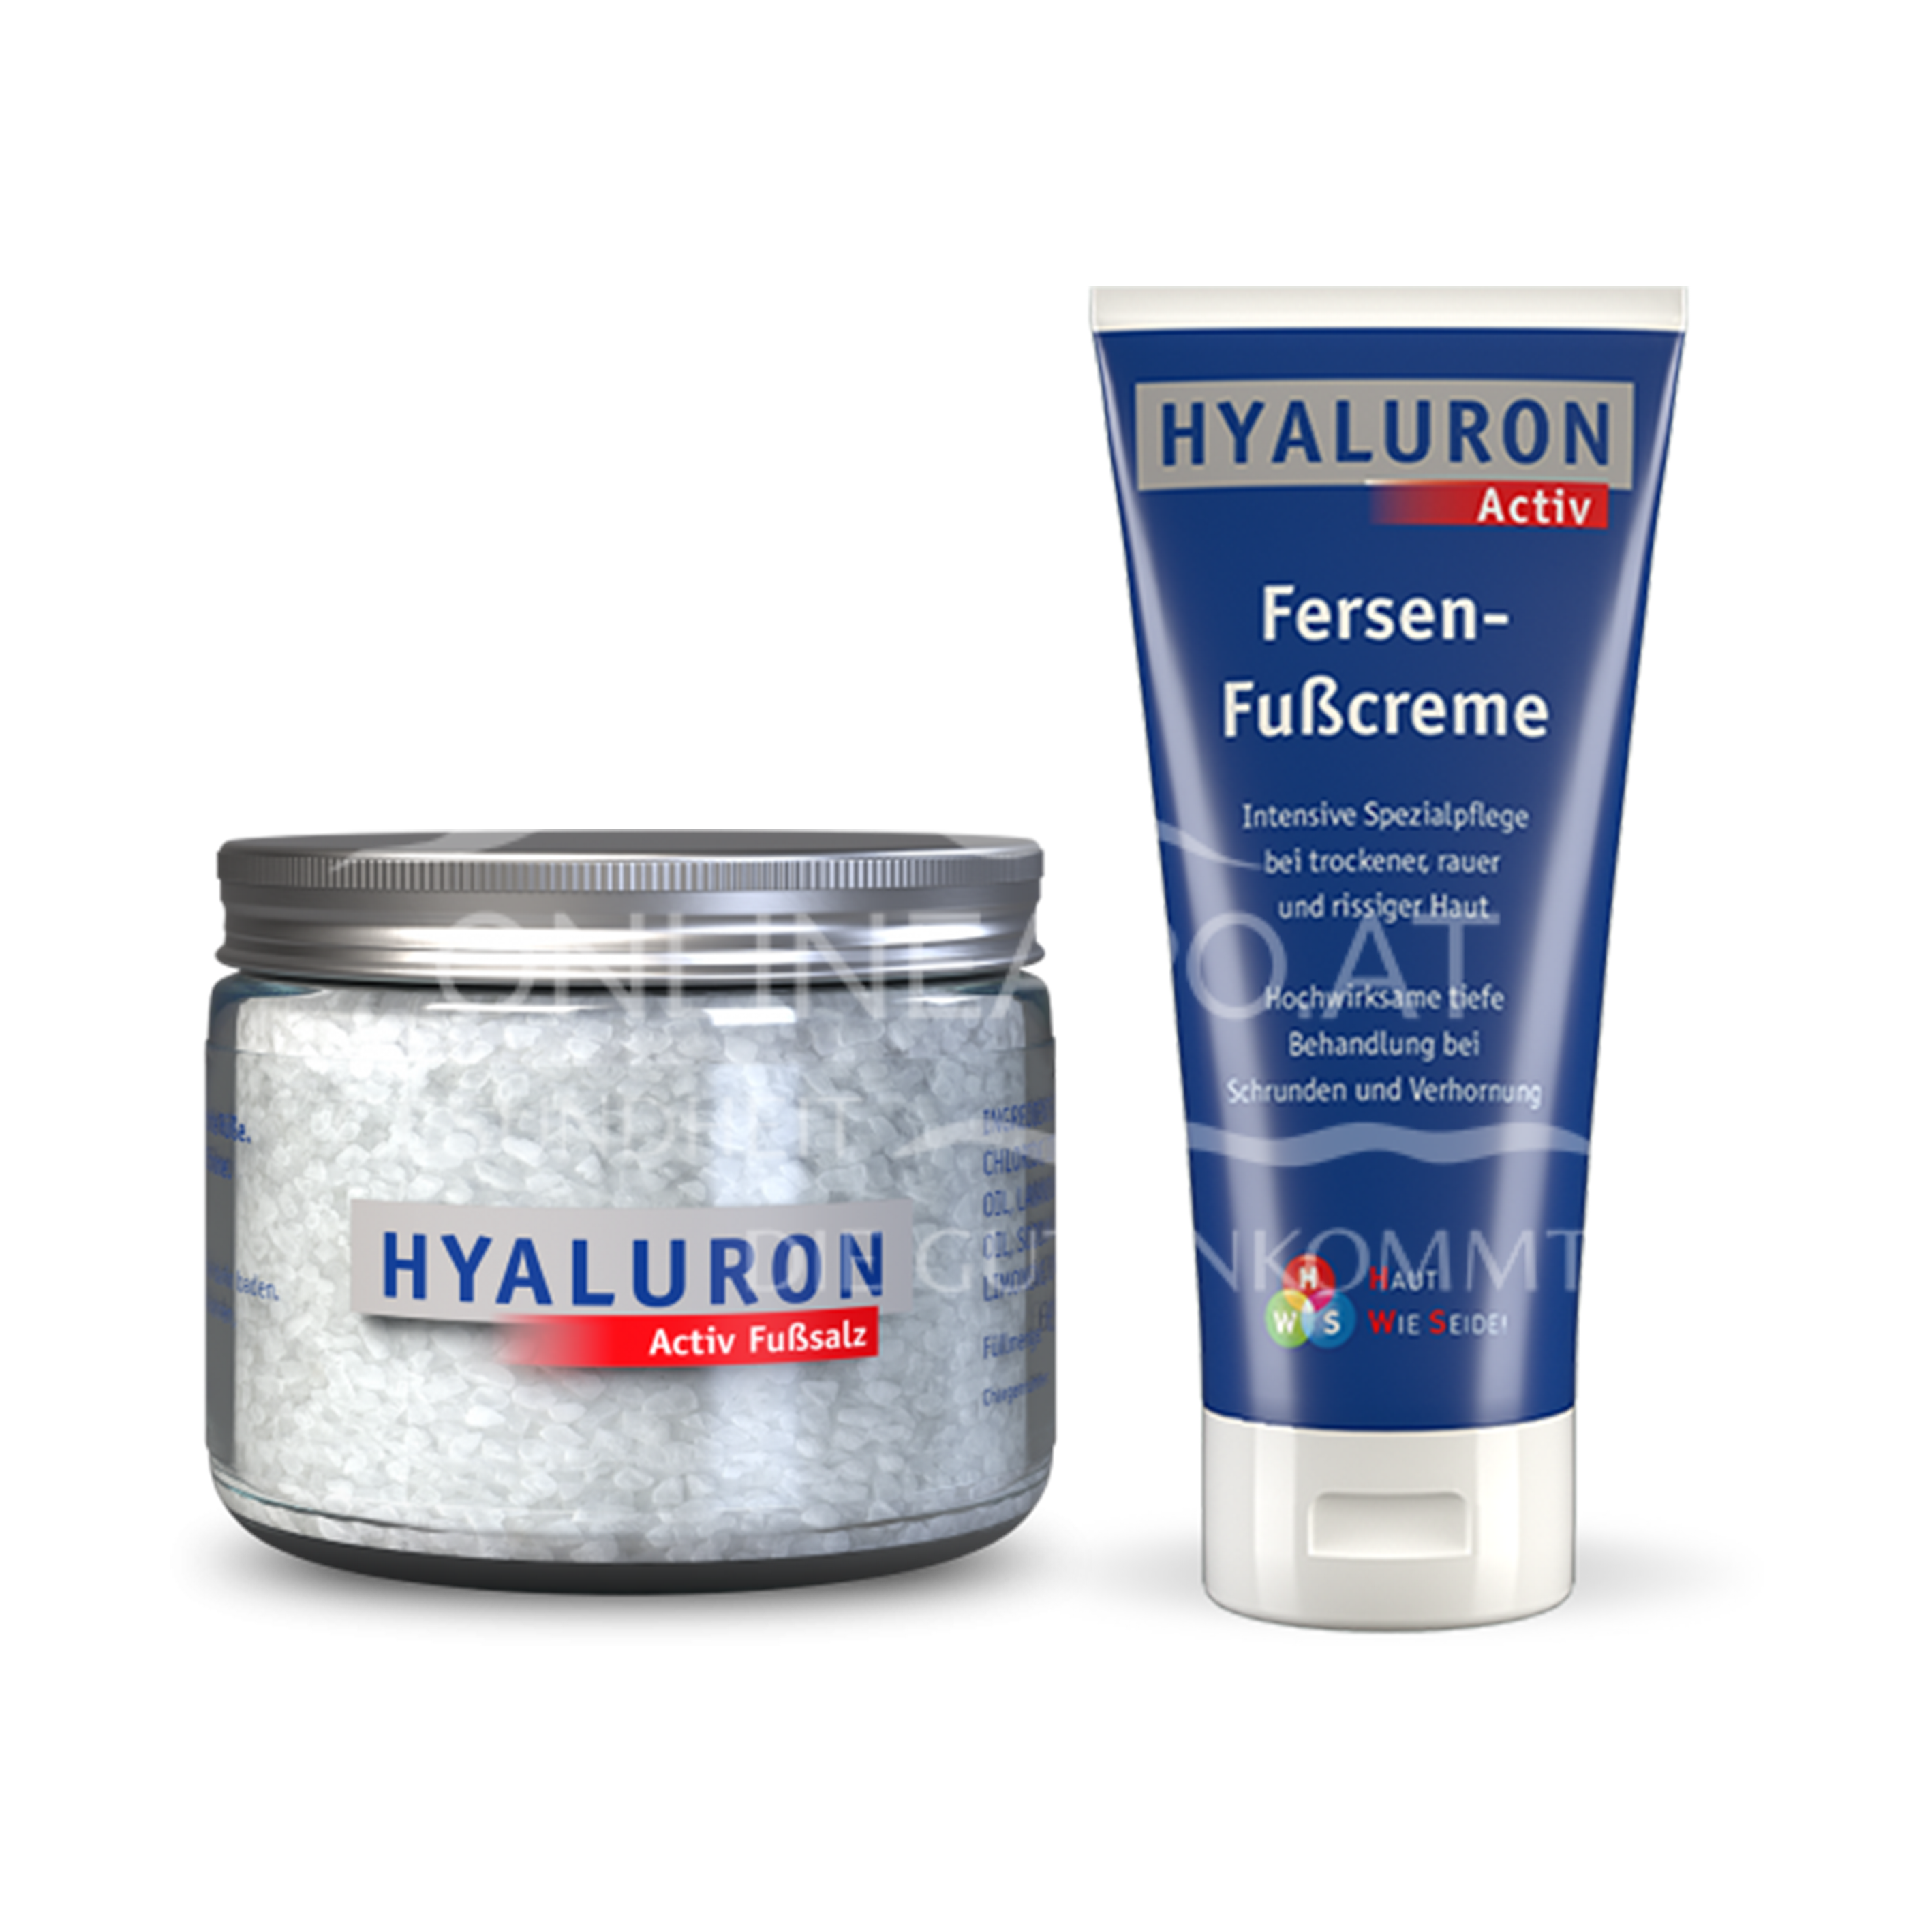 Hyaluron Activ Fersen-Fußcreme 100 ml + Fußsalz 100 g Aktion